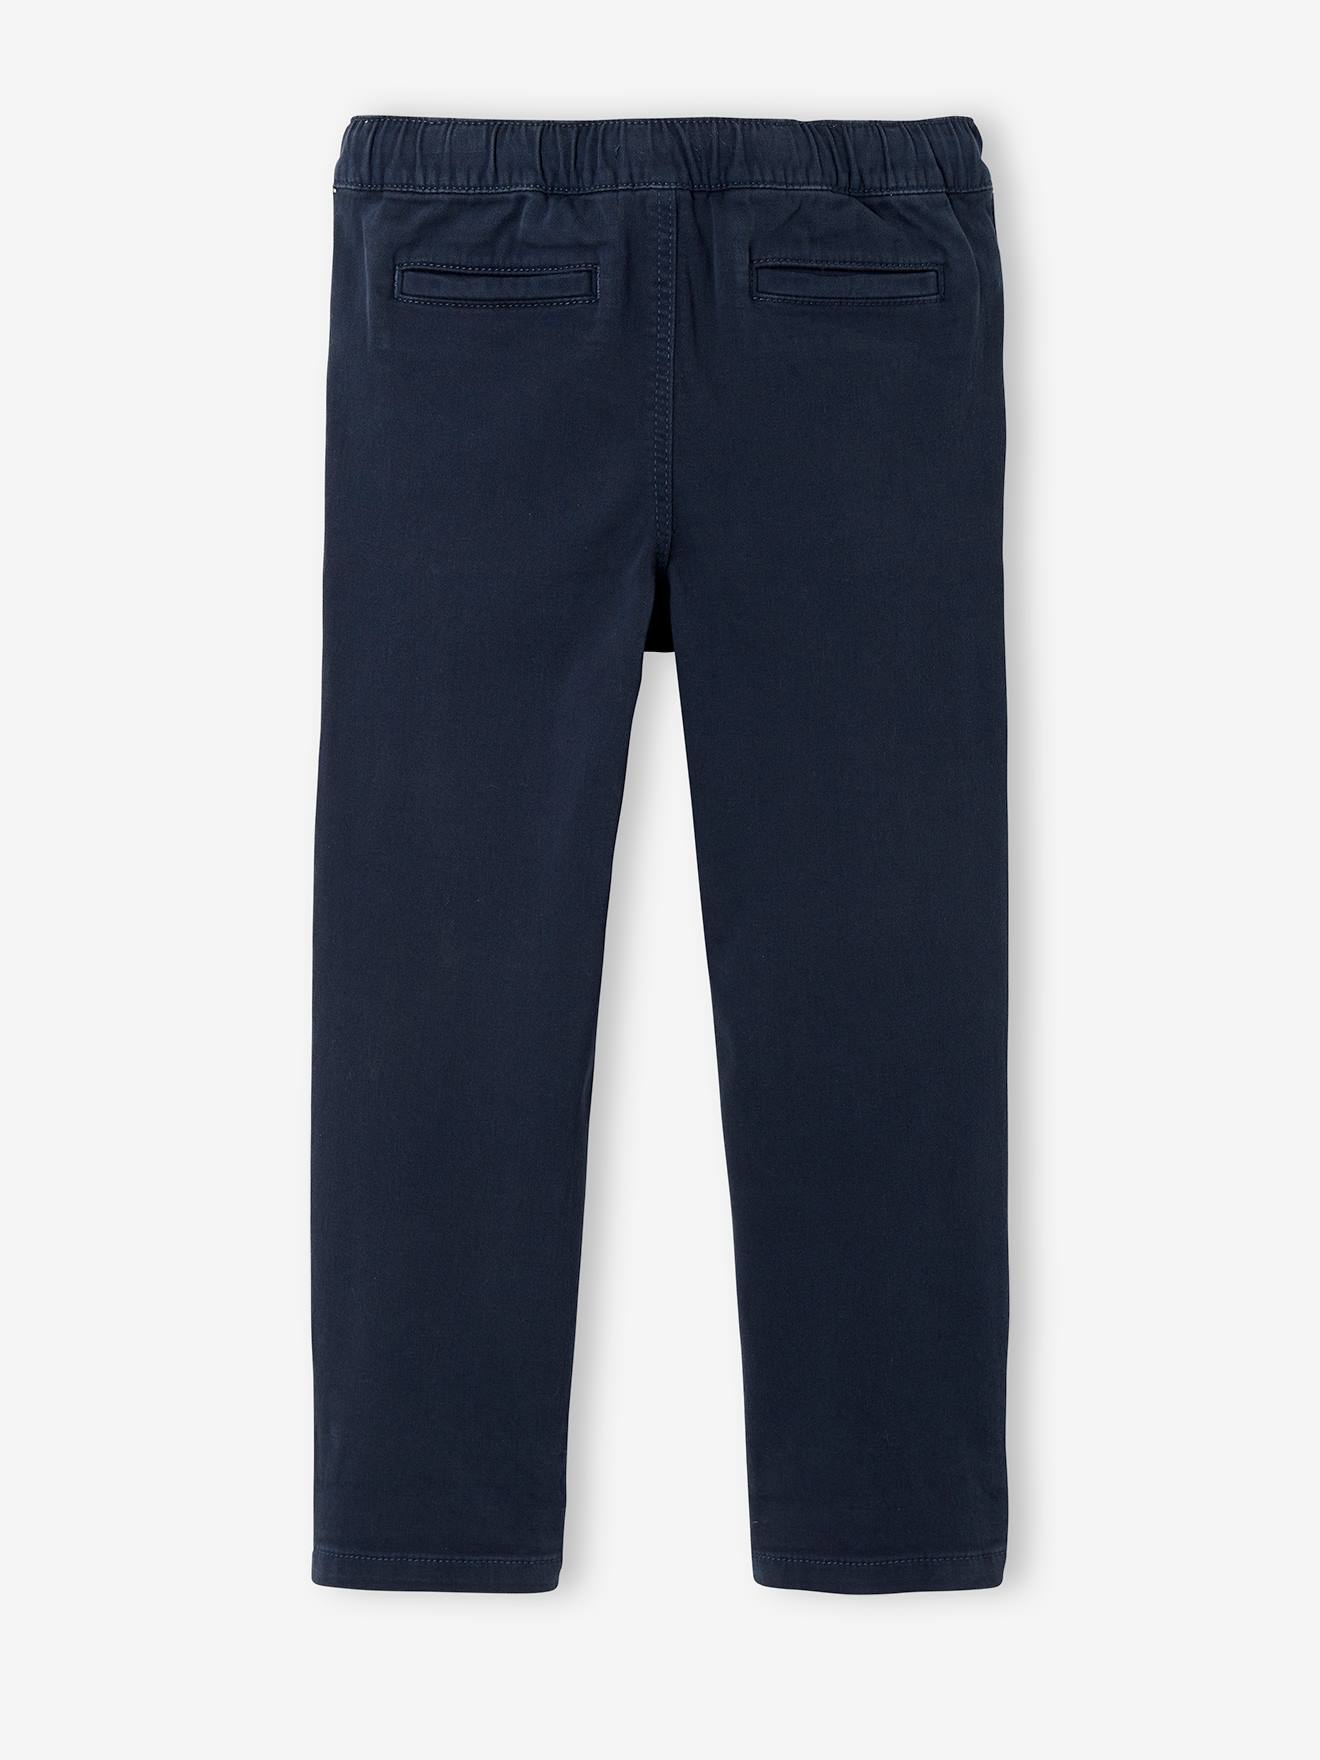 KIDS FASHION Trousers NO STYLE discount 98% Zara slacks Navy Blue 12-18M 